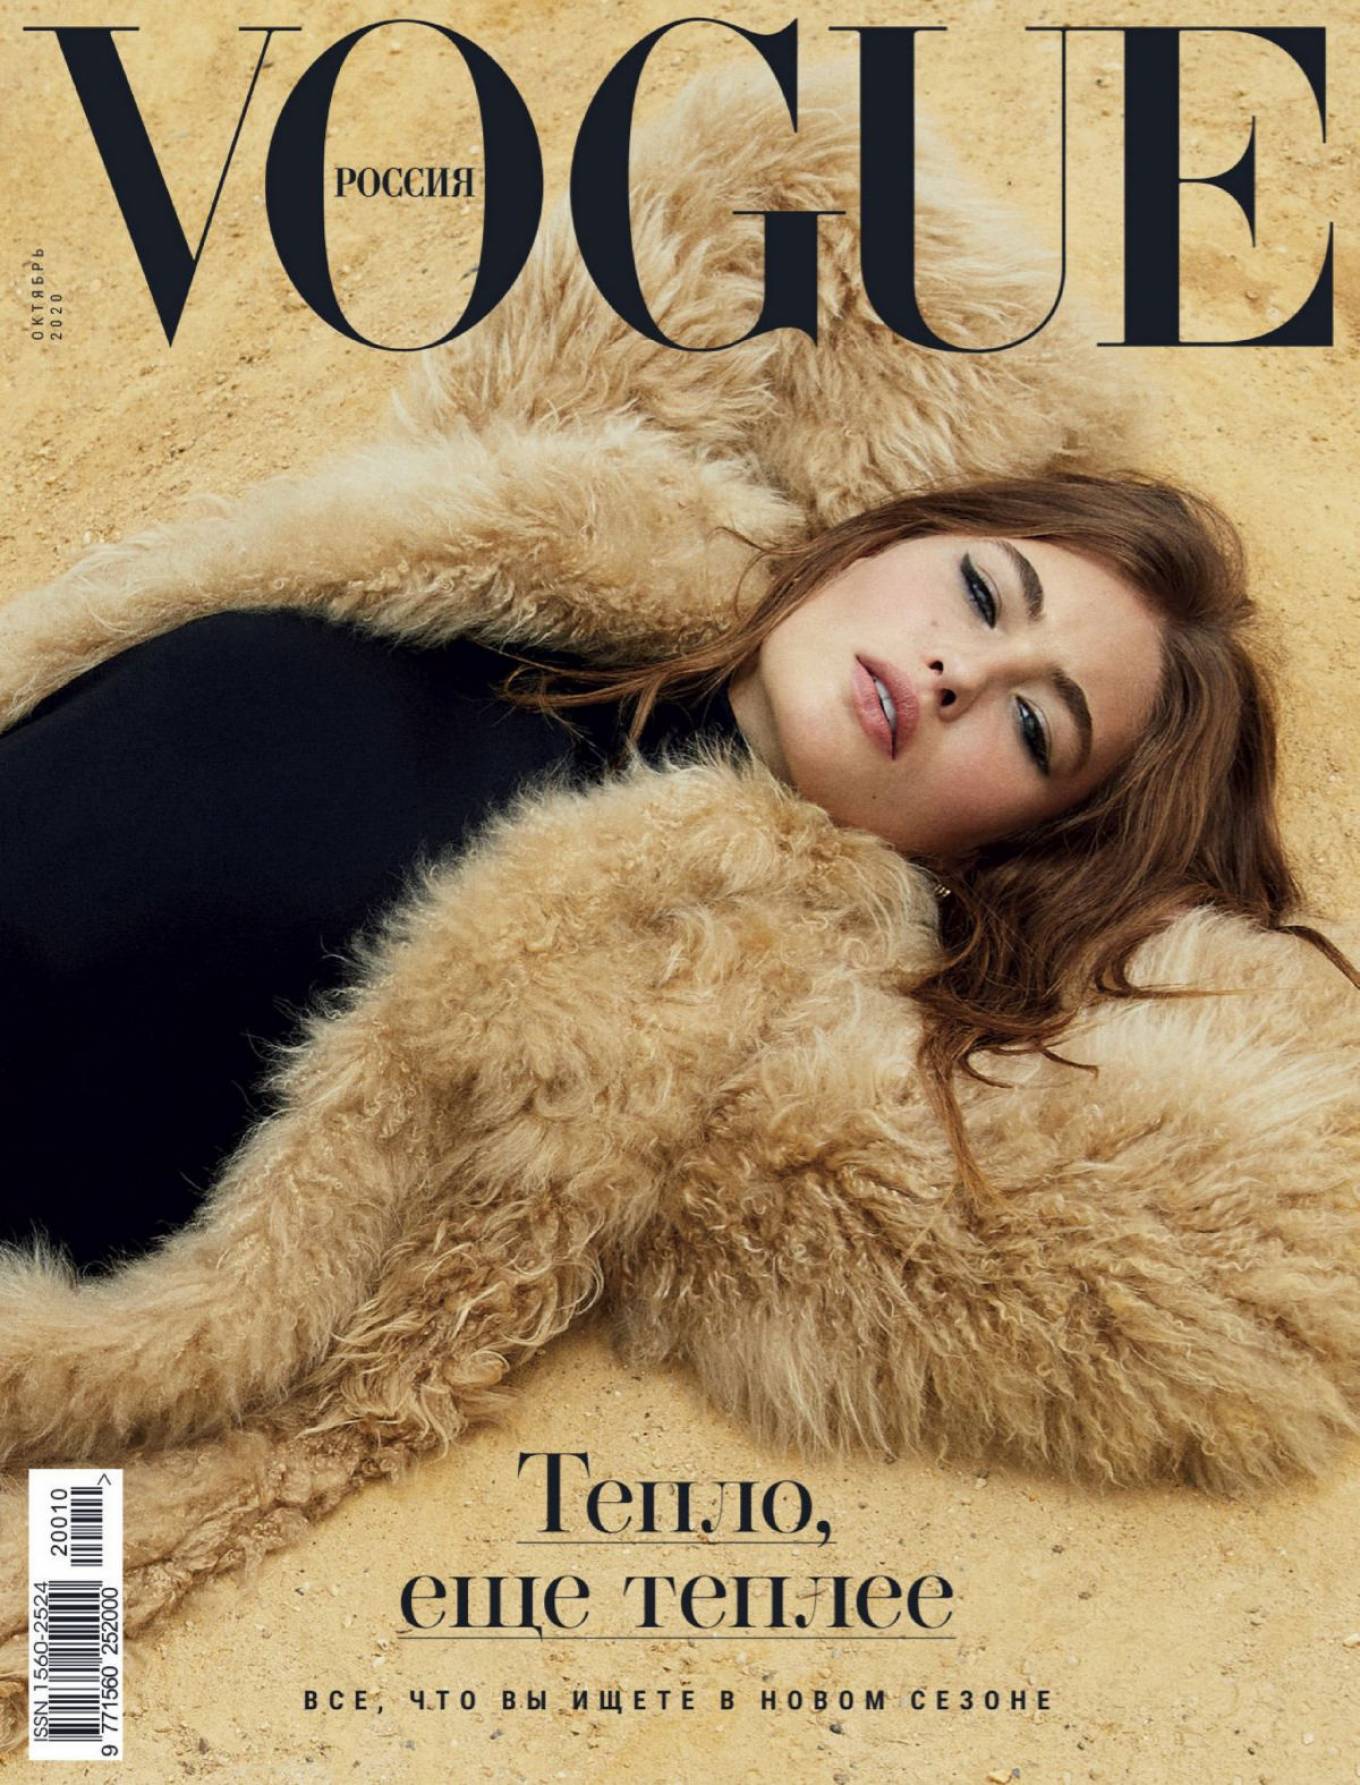 Grace Elizabeth – Vogue Magazine (Russia – October 2020 issue)